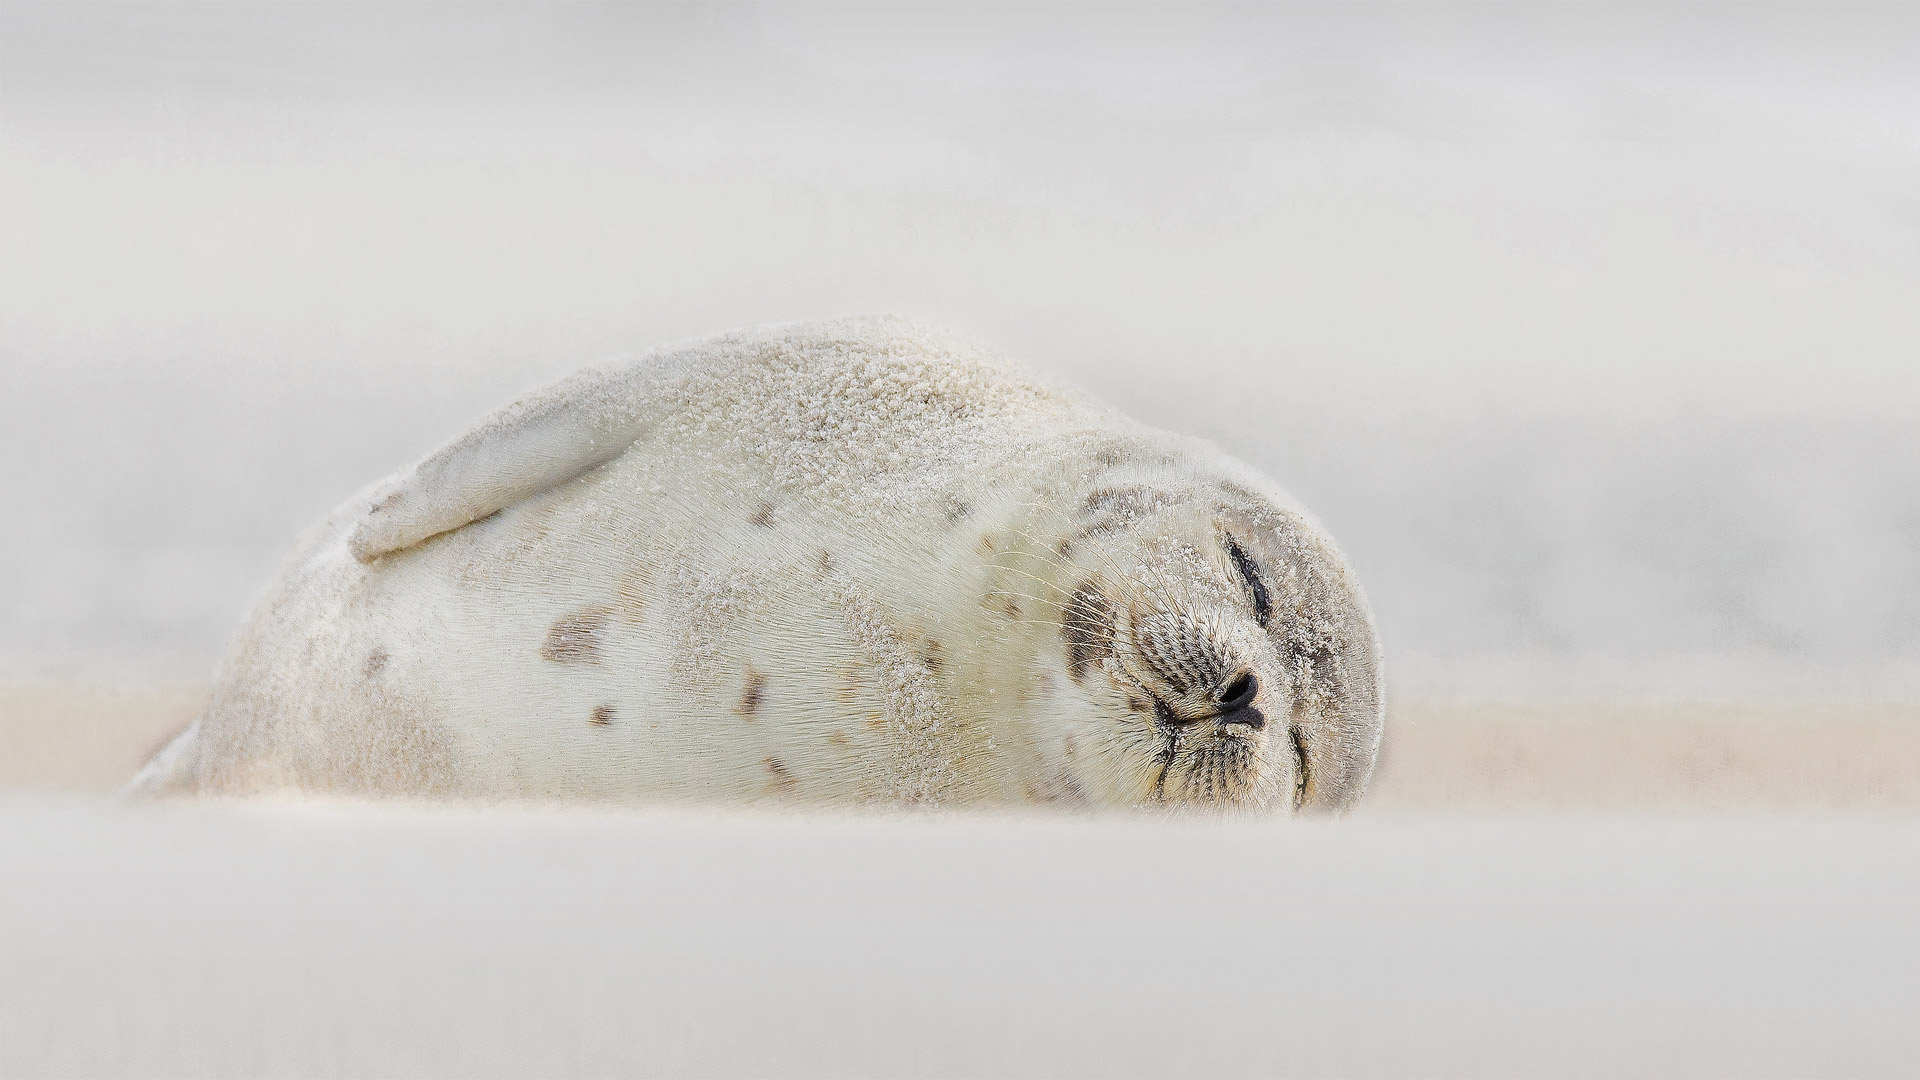 Harp seal sleeping at Jones Beach, Long Island, New York - Vicki Jauron, Babylon and Beyond Photography/Getty Images)